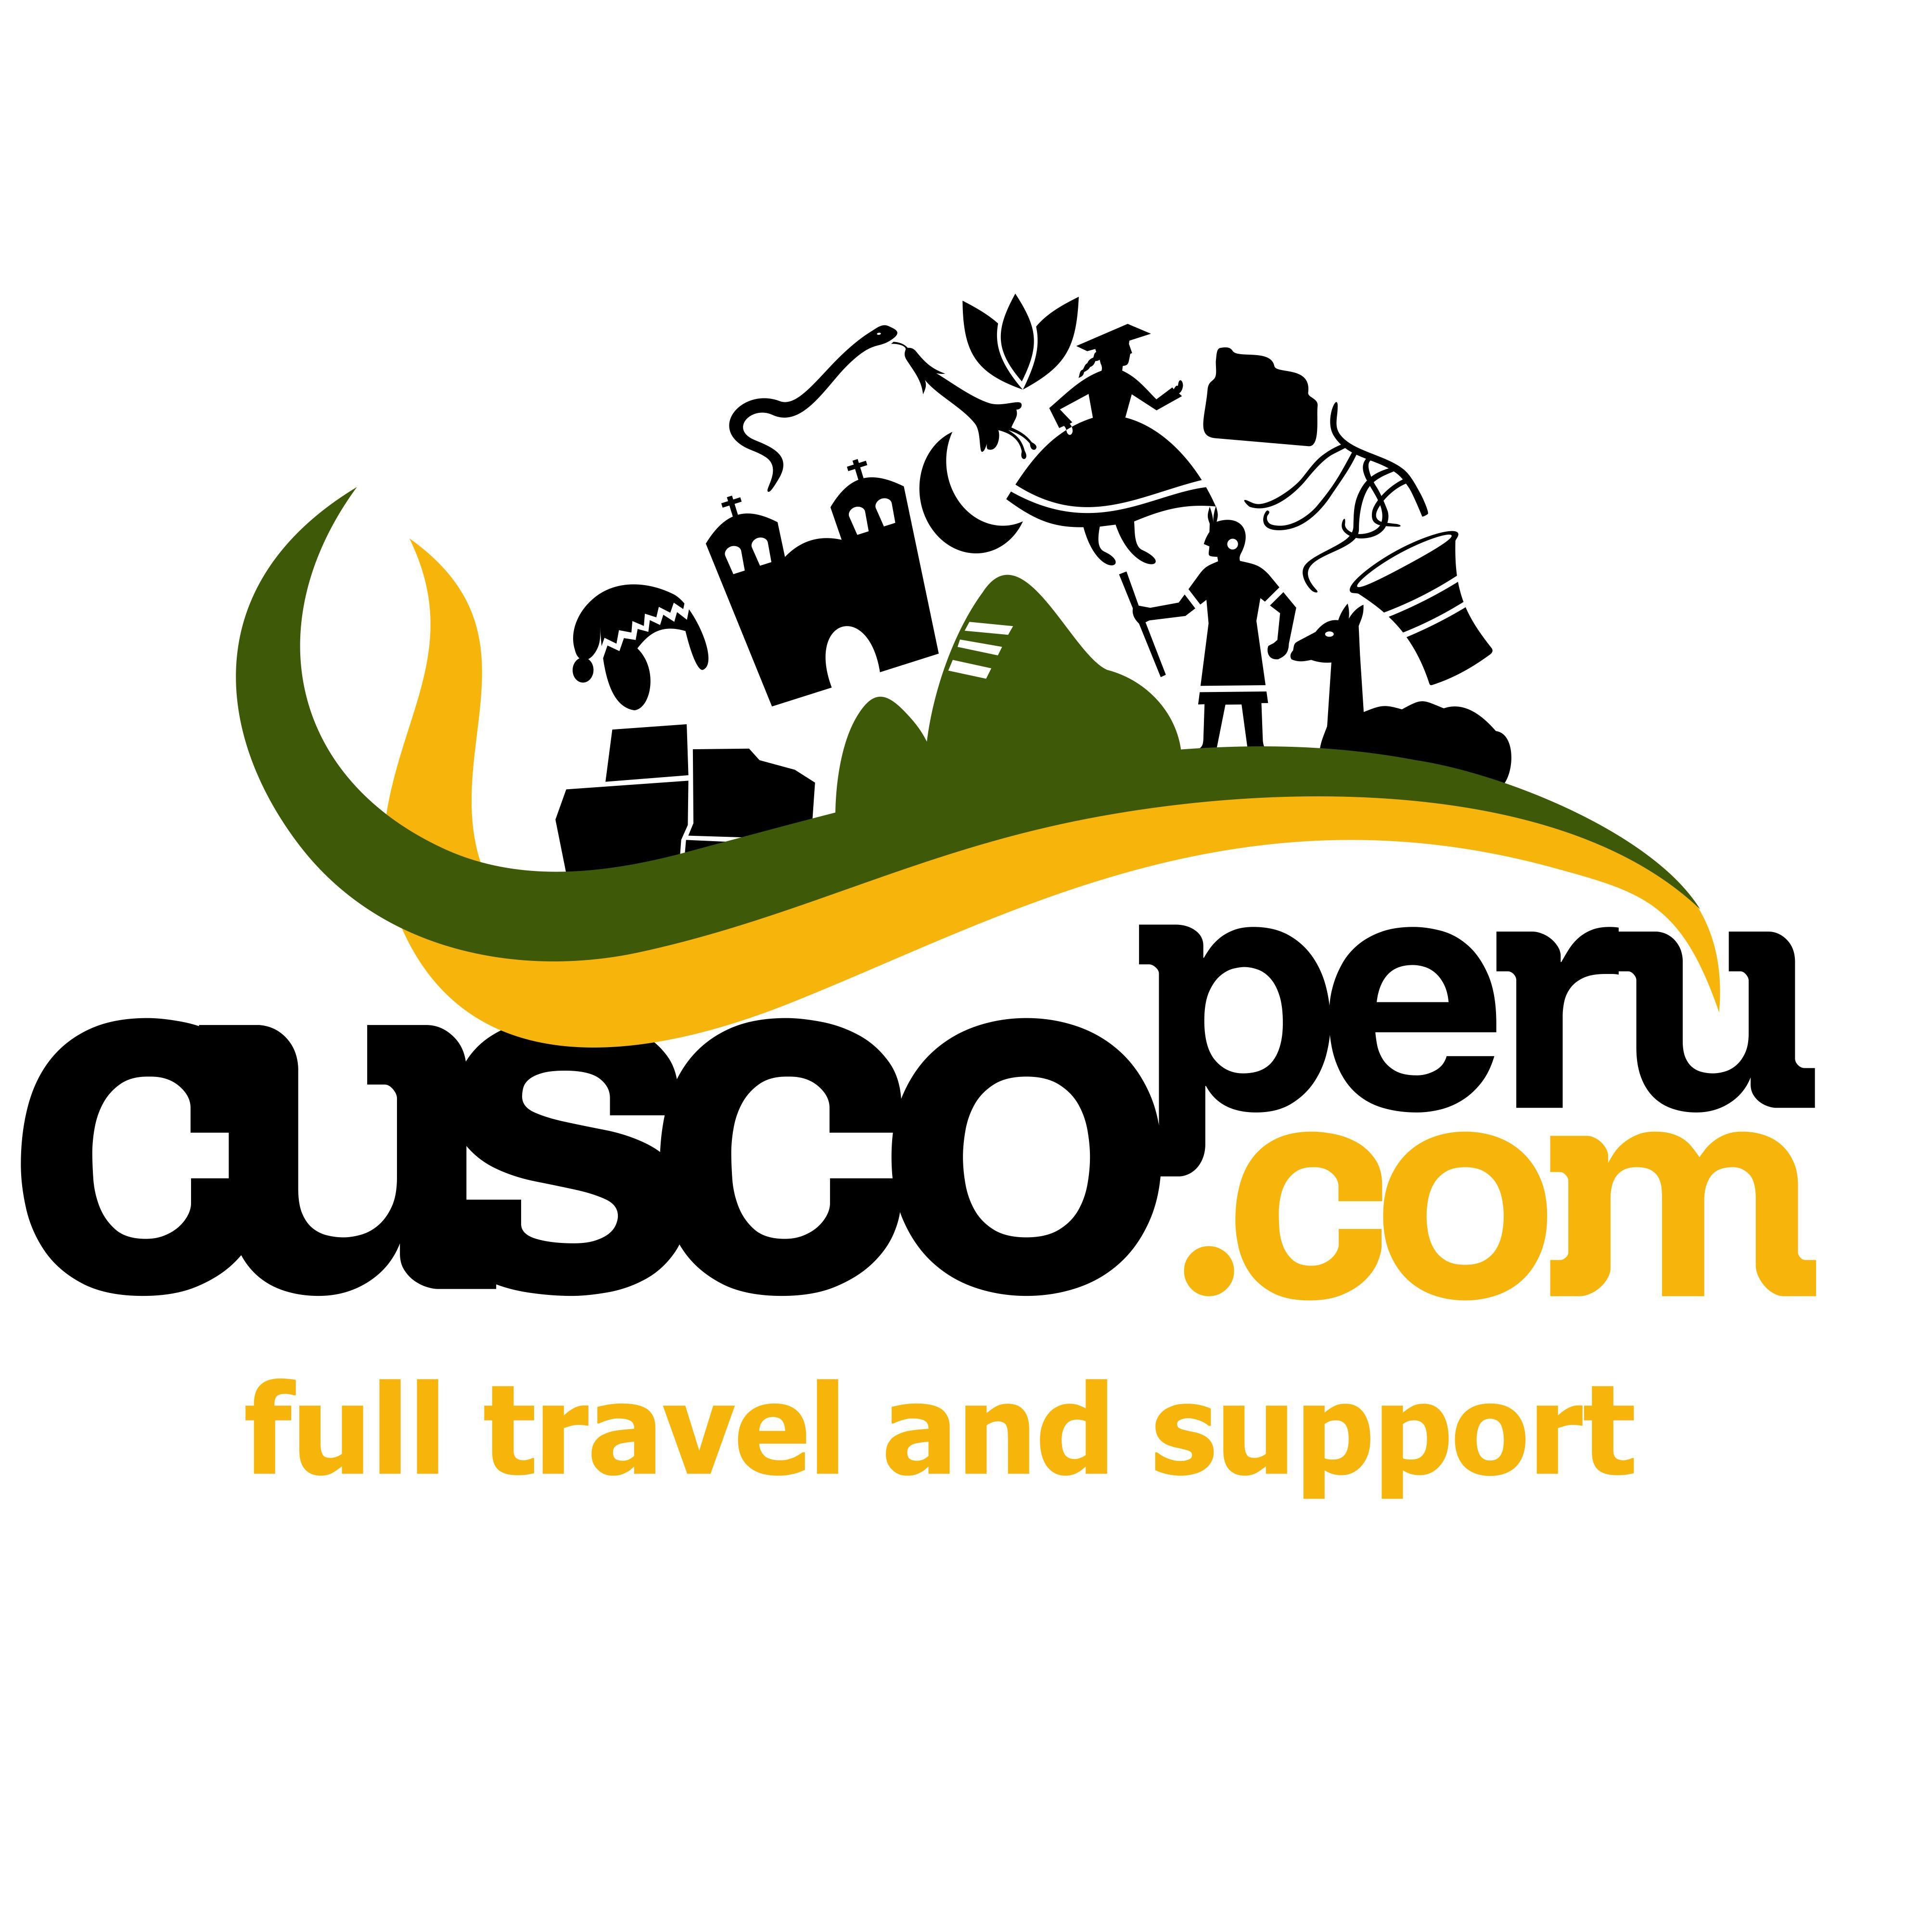 Cusco Logo - Cusco Peru on Twitter: 